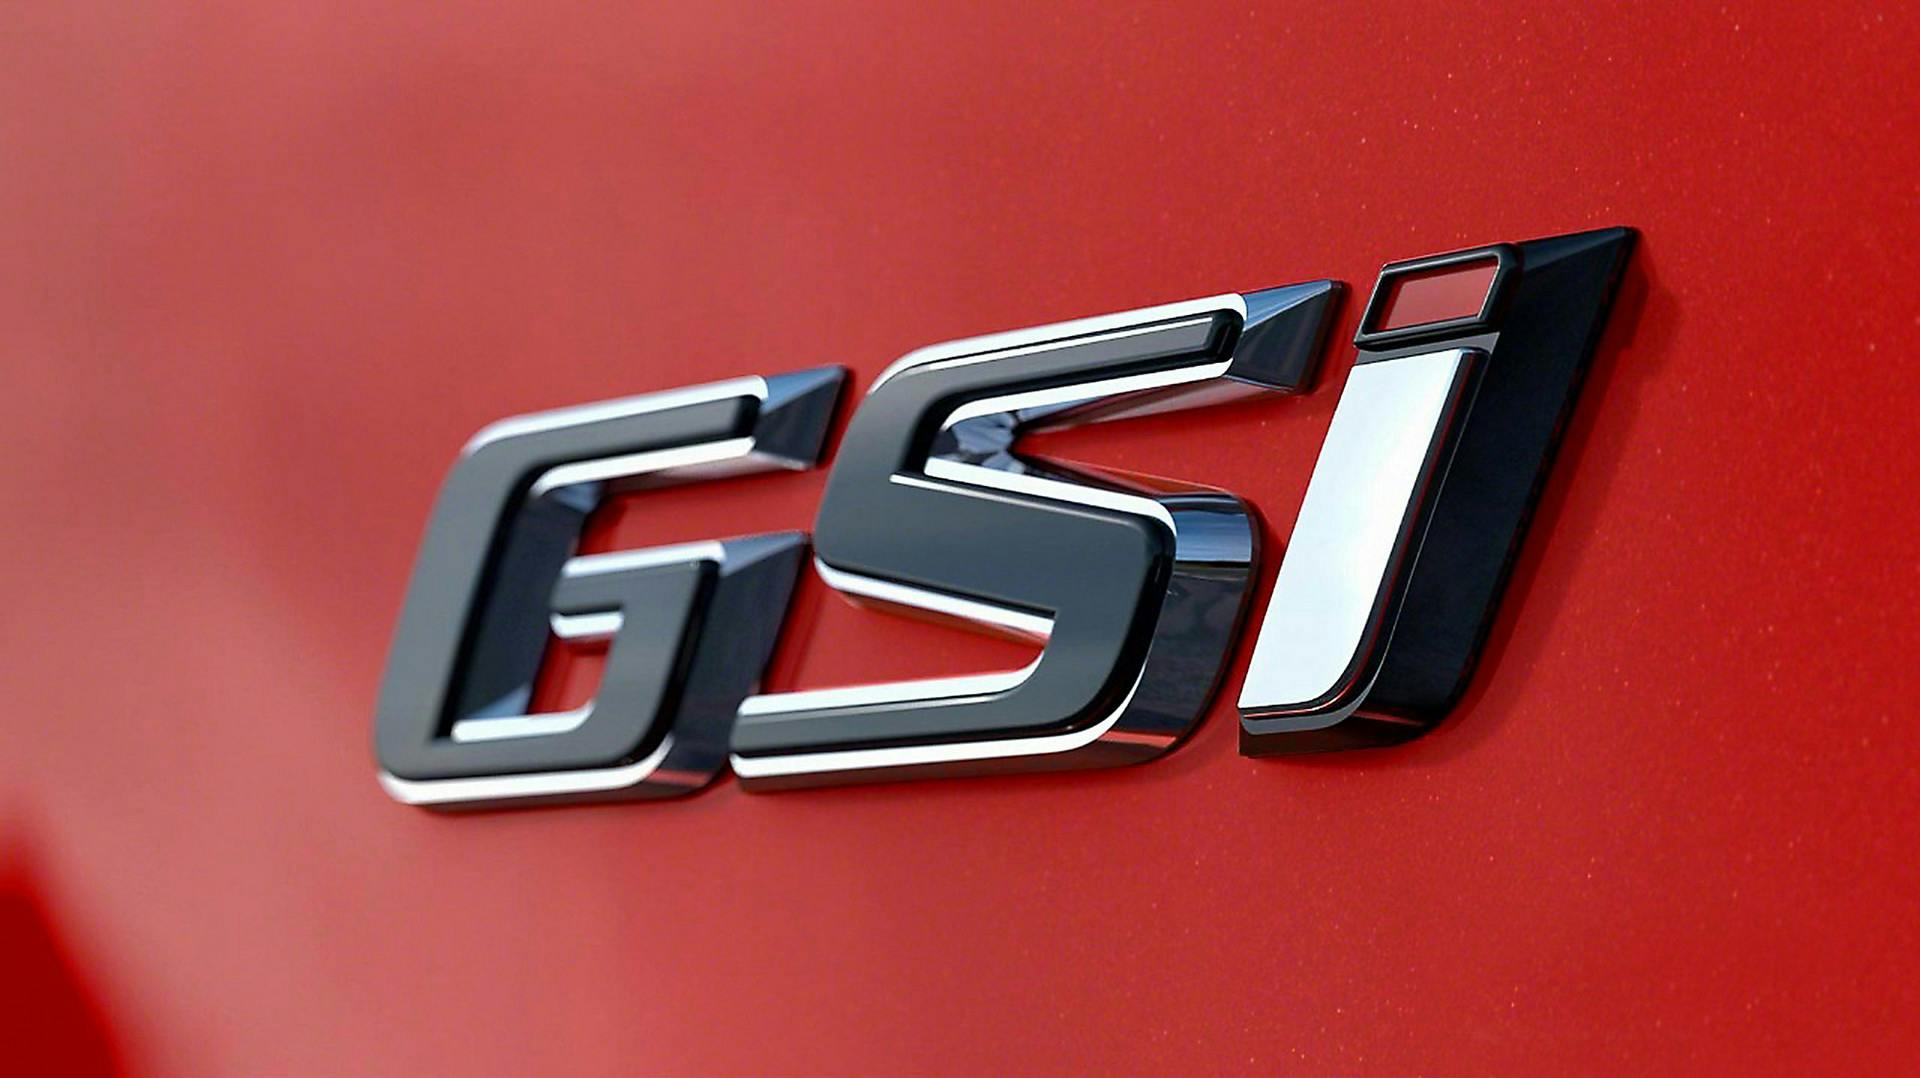 Opel Insignia GSi logo